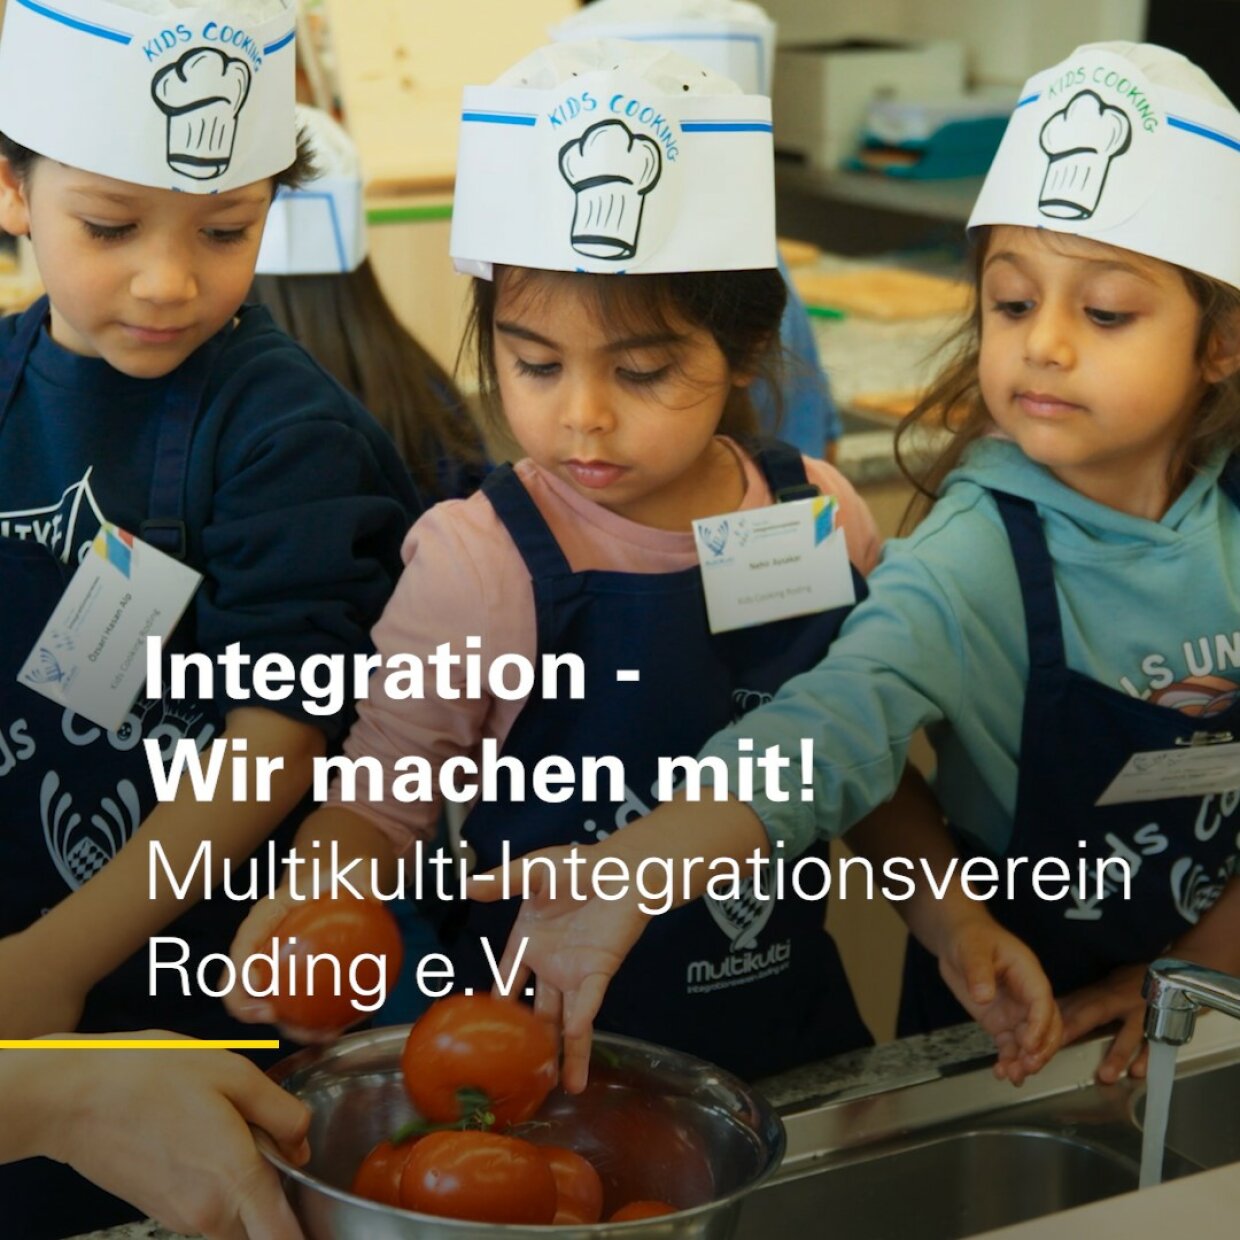 Integration - Wir machen mit! Multikulti-Integrationsverein Roding e.V.